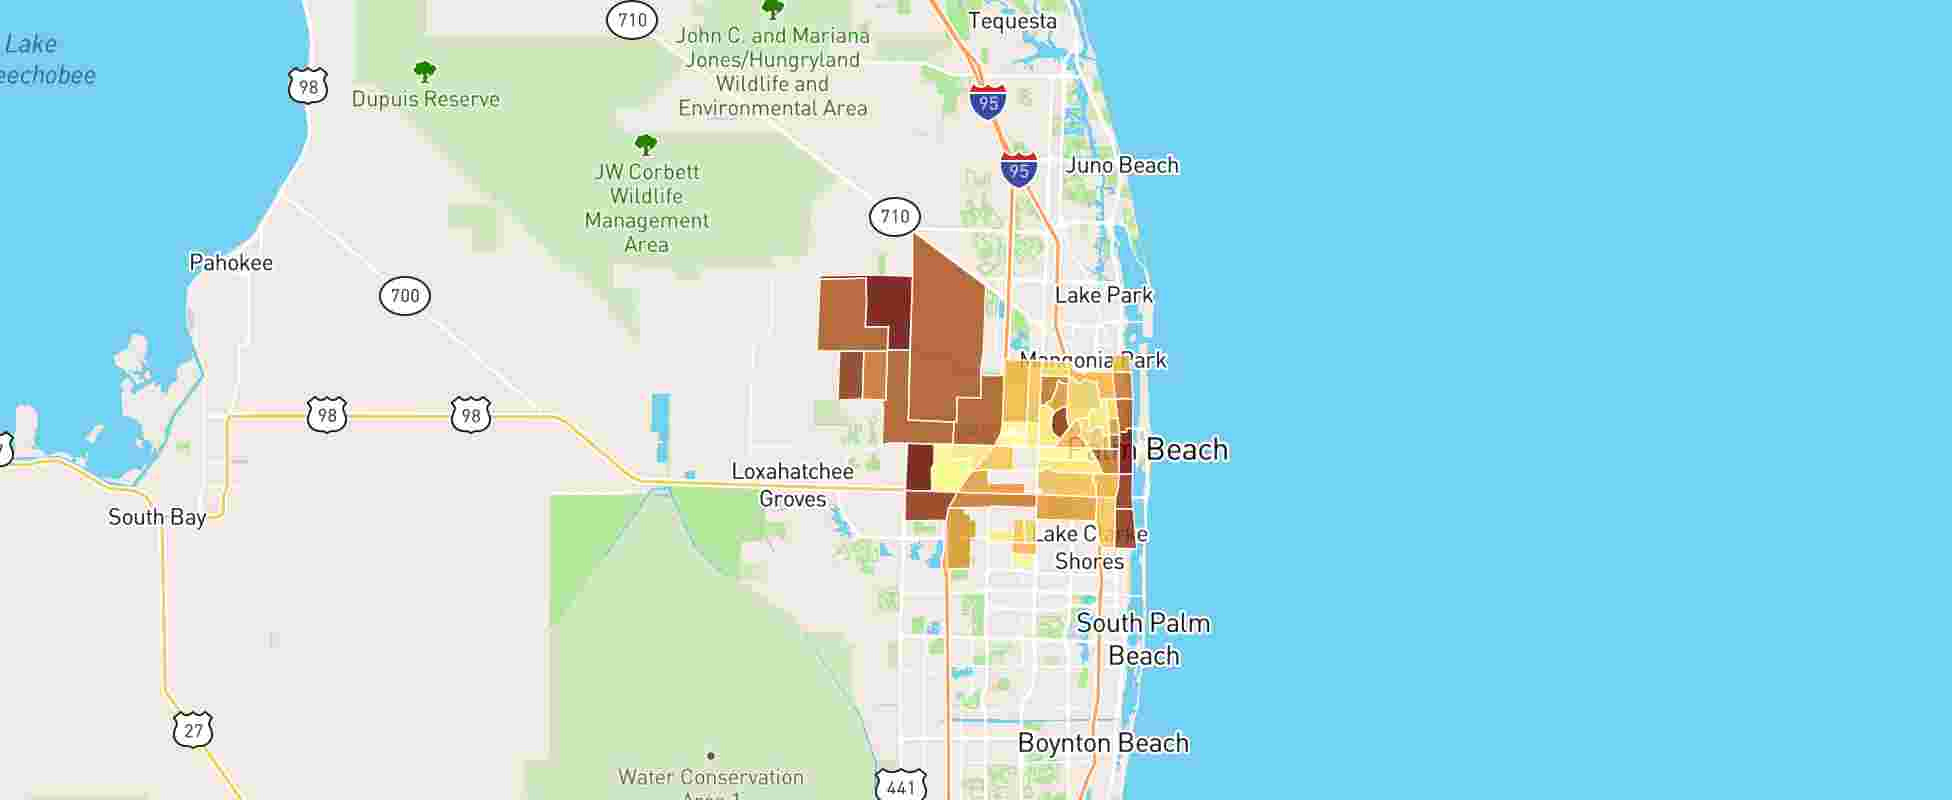 West Palm Beach FL Real Estate Market Data NeighborhoodScout